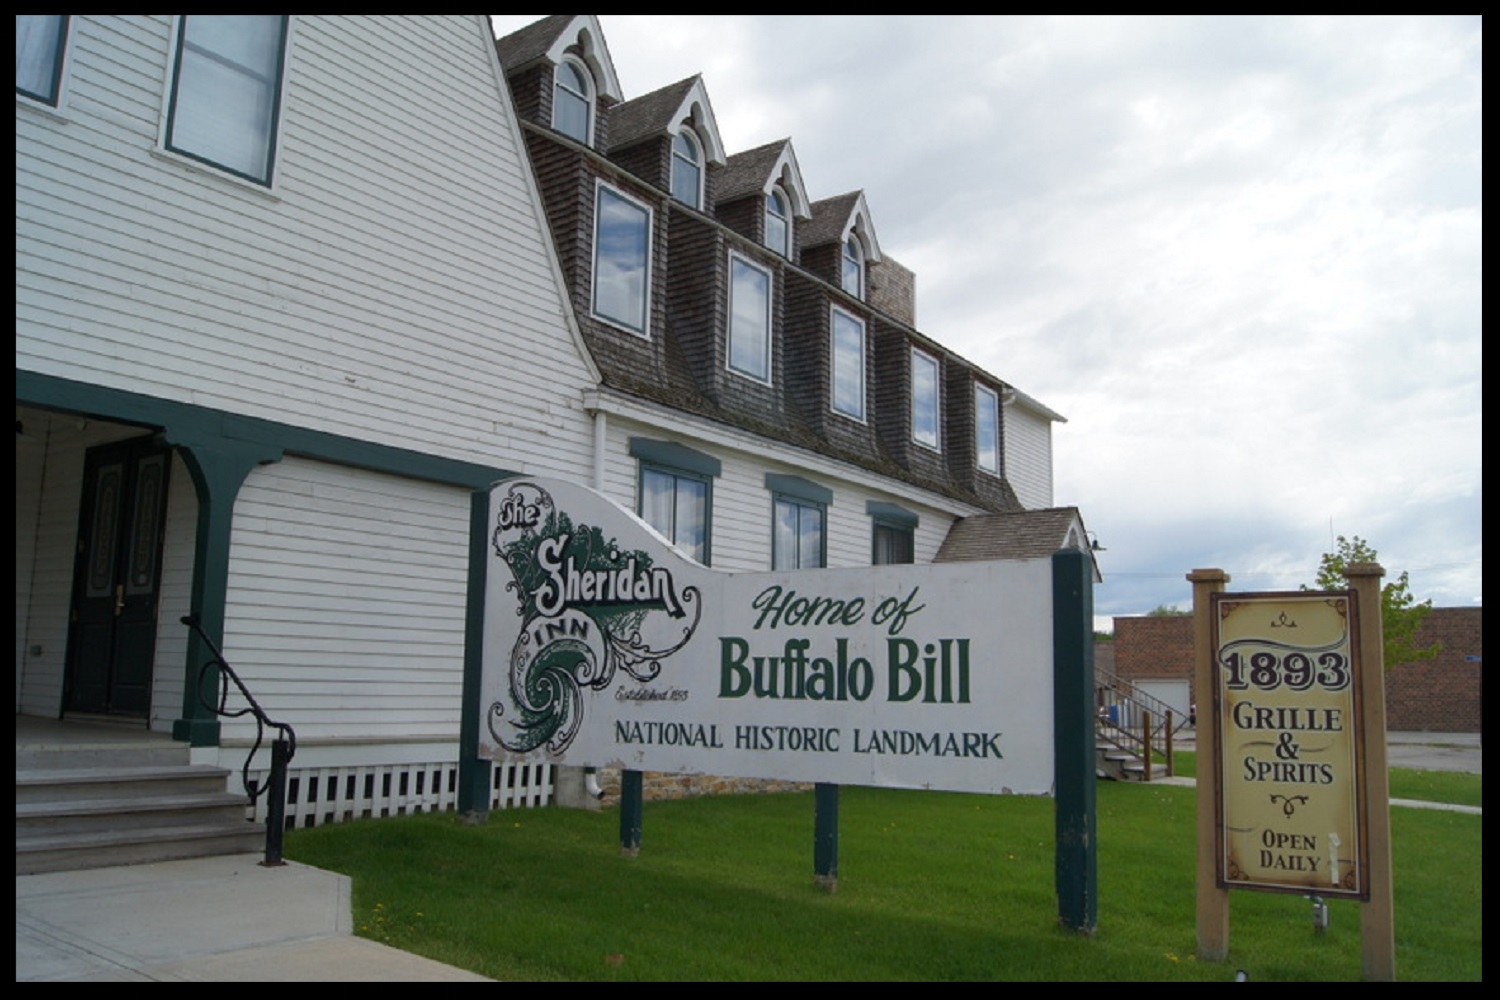 Sheridan Inn - Home of Buffalo Bill (Sheridan, WY)